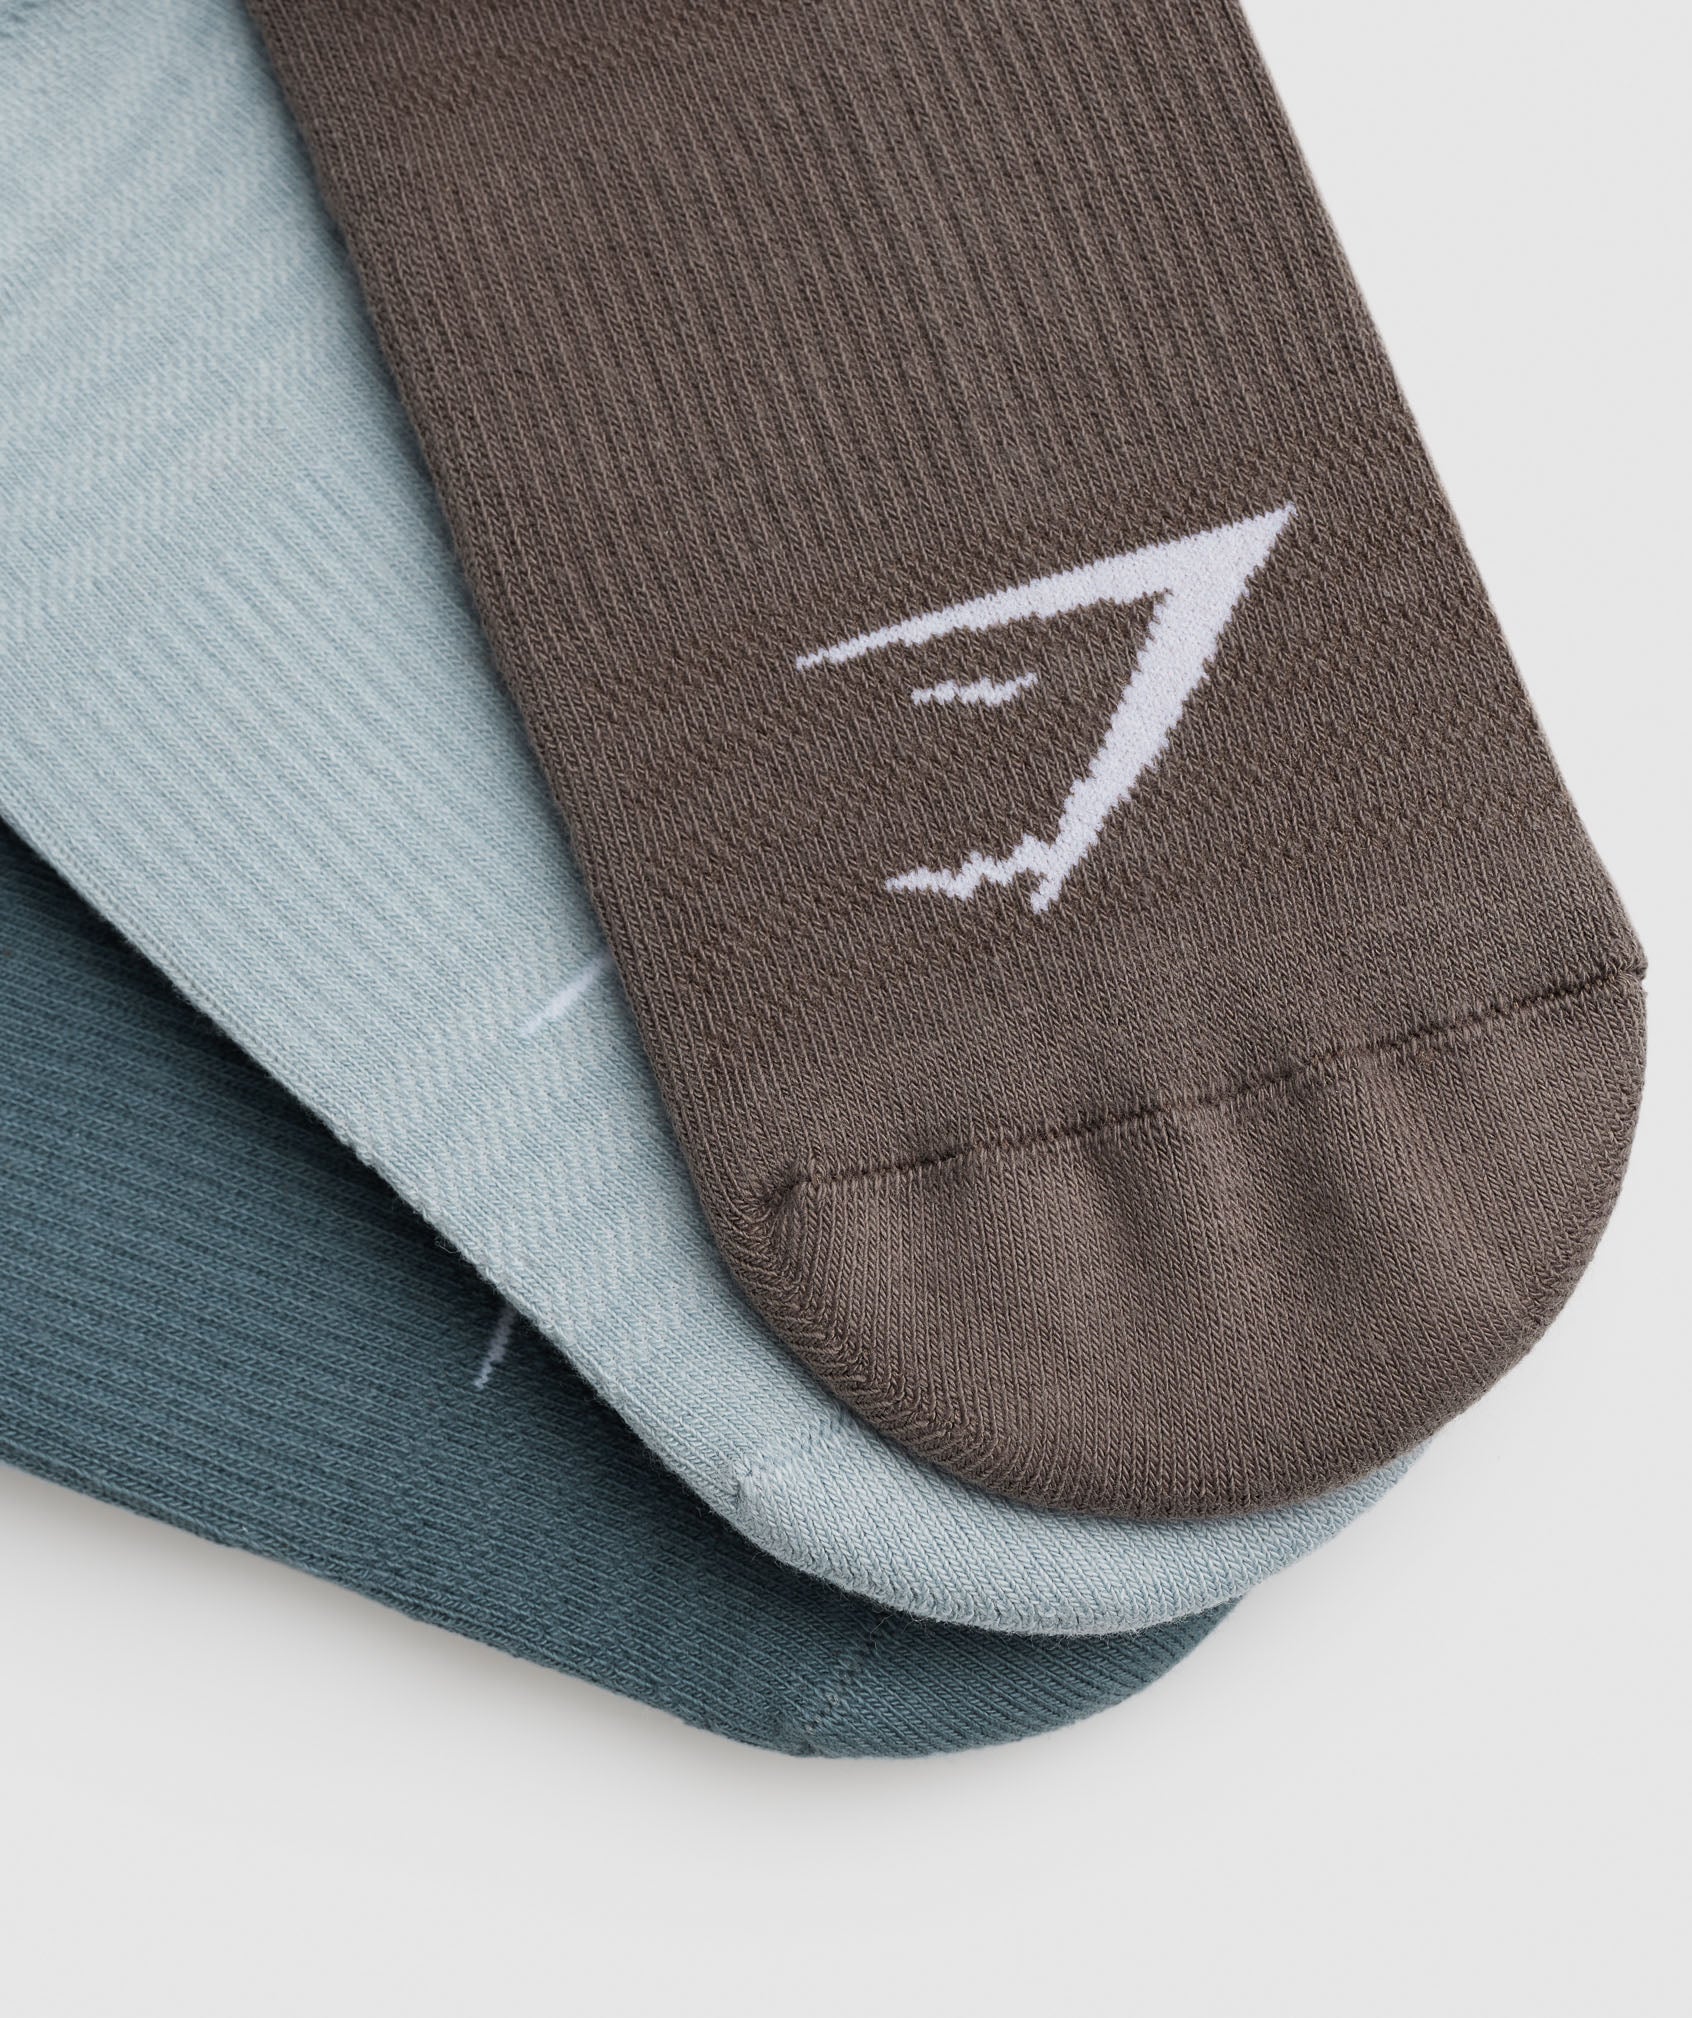 Ankle Socks 3pk in Denim Teal/Salt Blue/Camo Brown - view 2